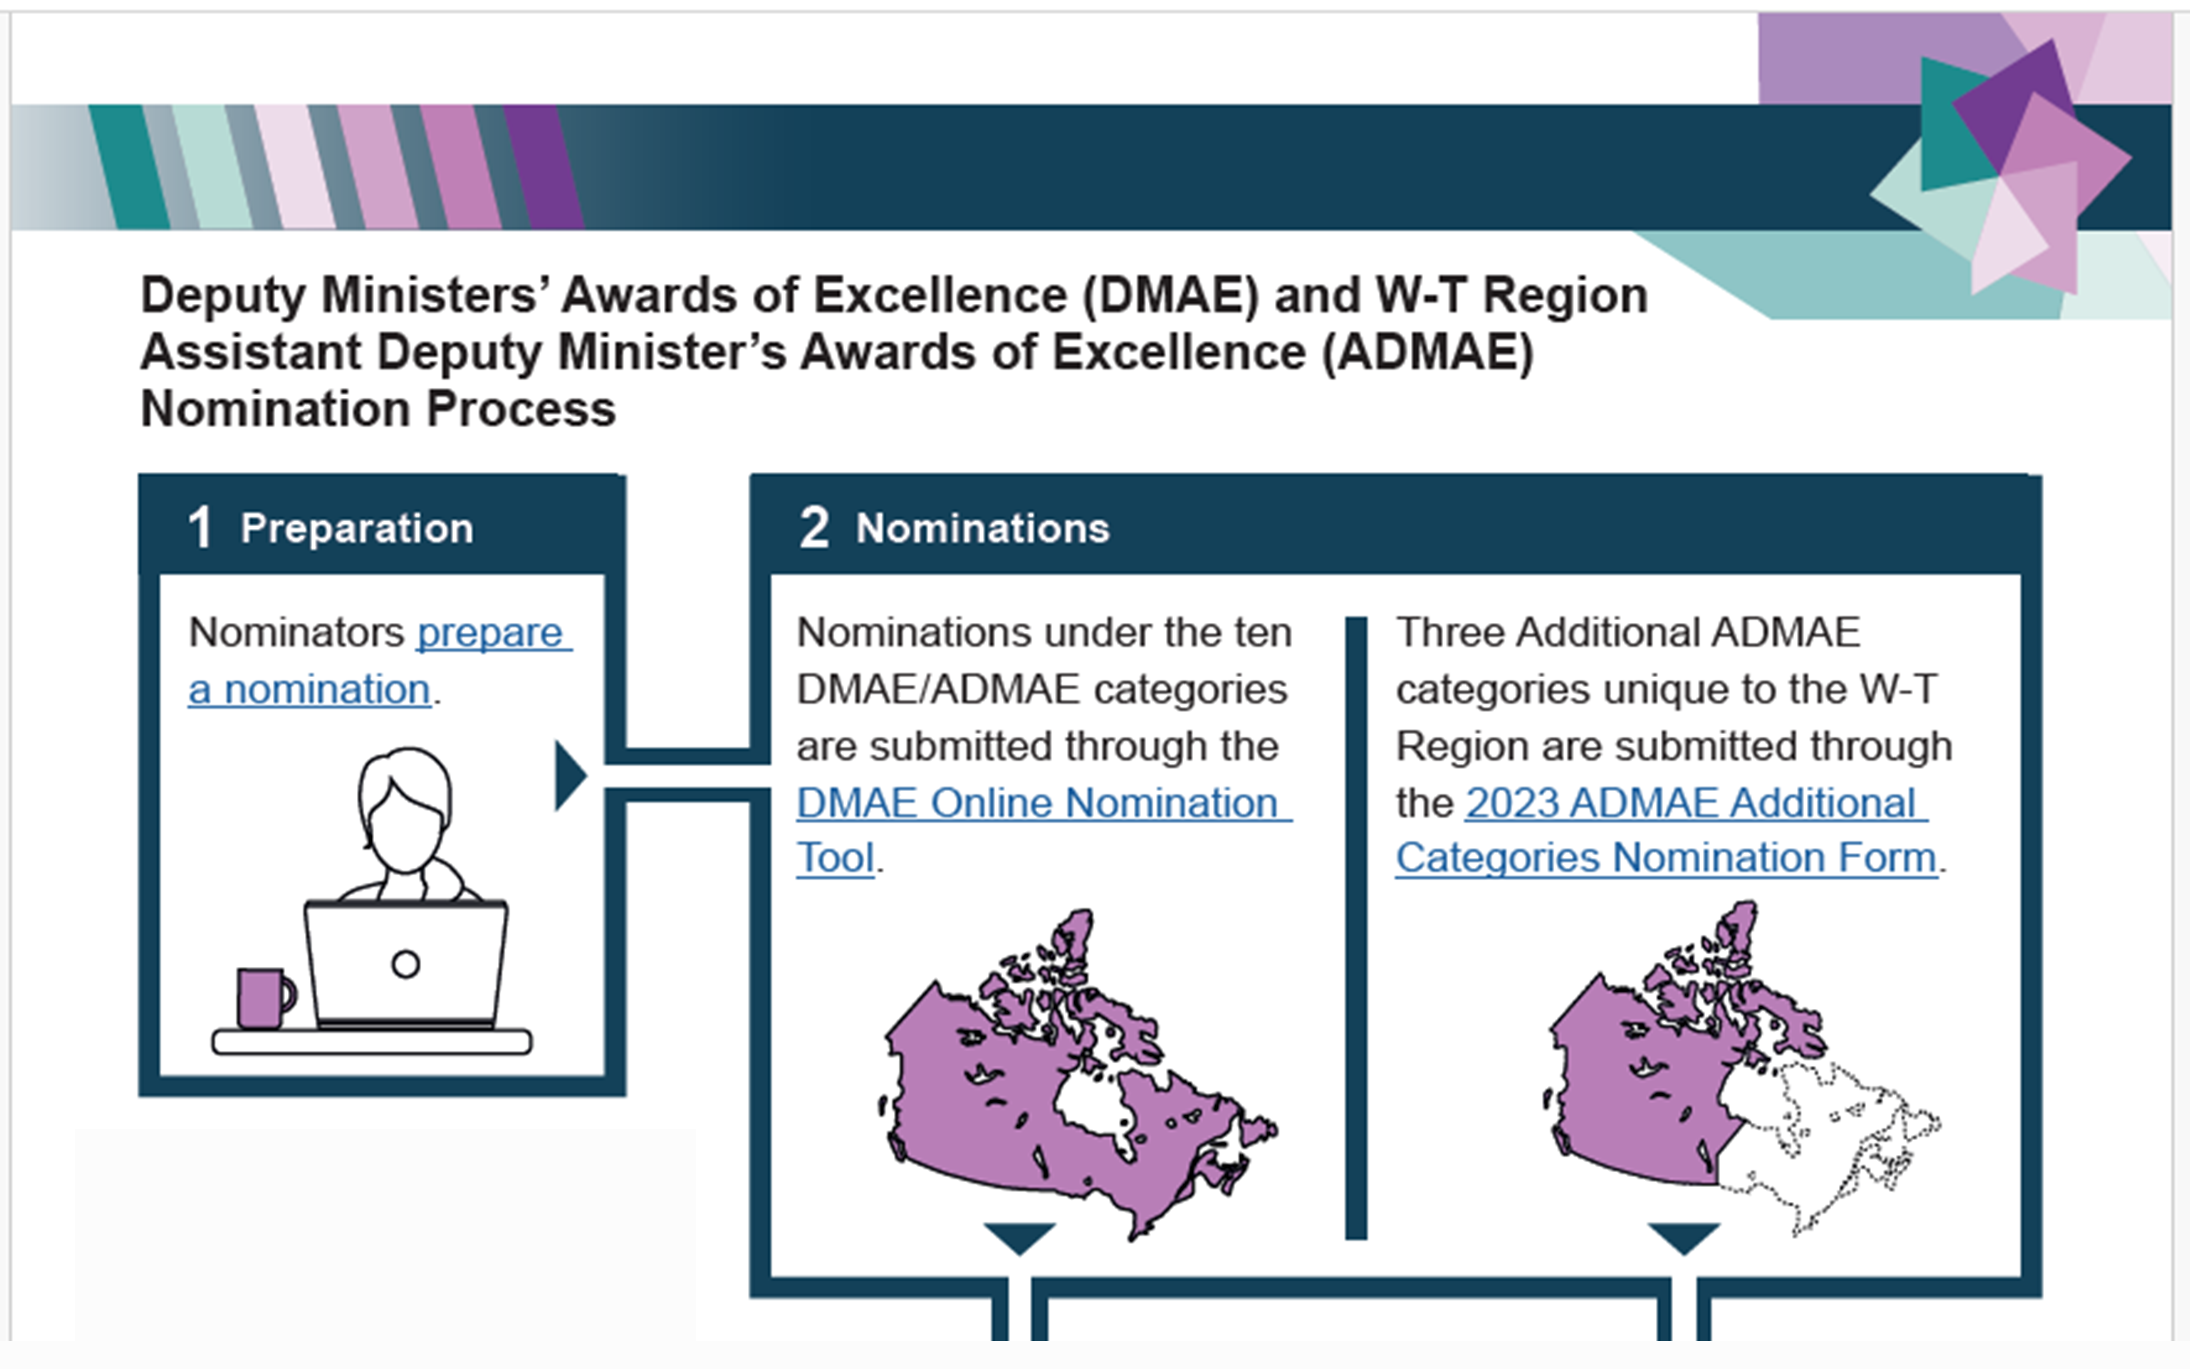 DMAE and ADMAE Nomination Process